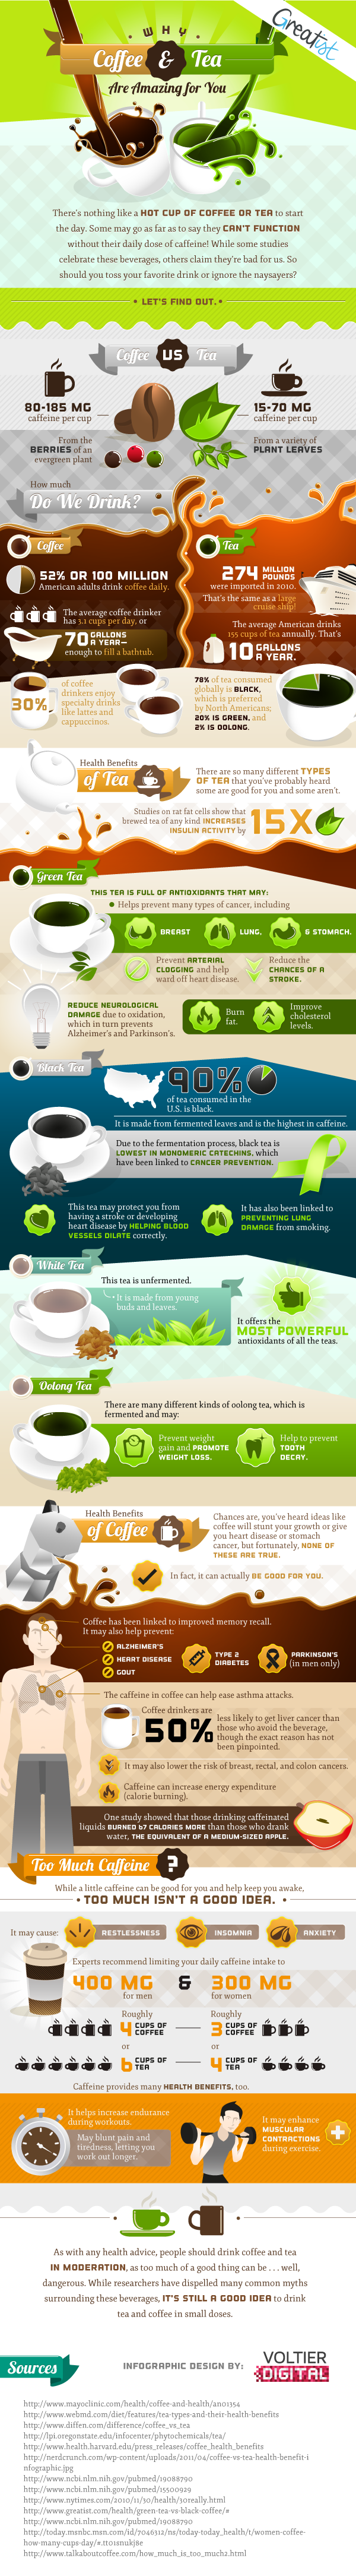 Cool New Coffee & Tea Infographic!